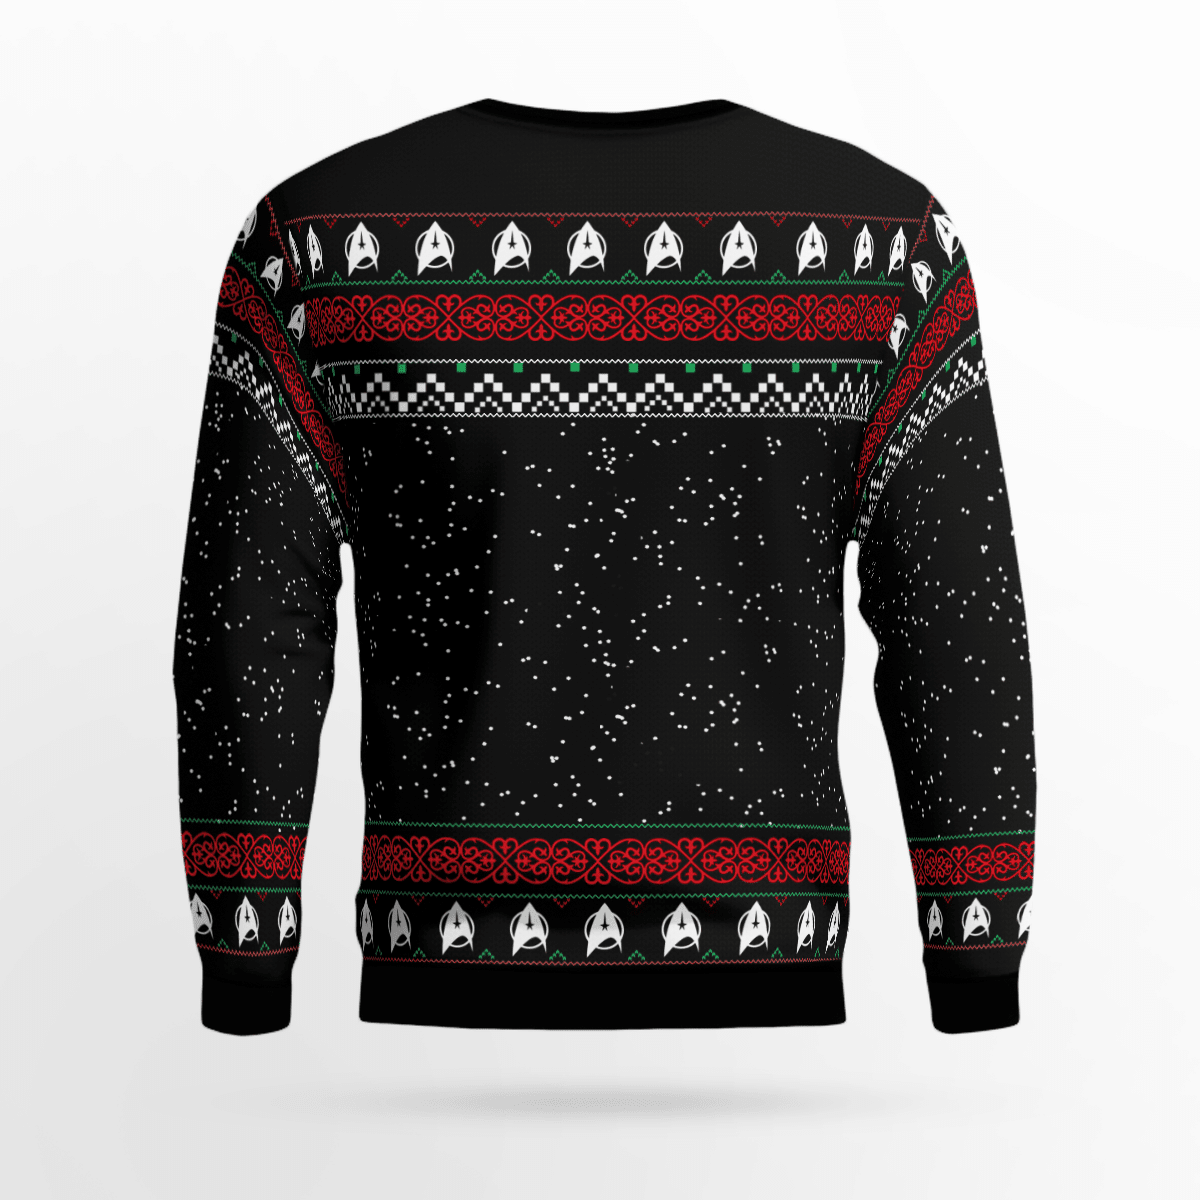 Make It Snow Sweater